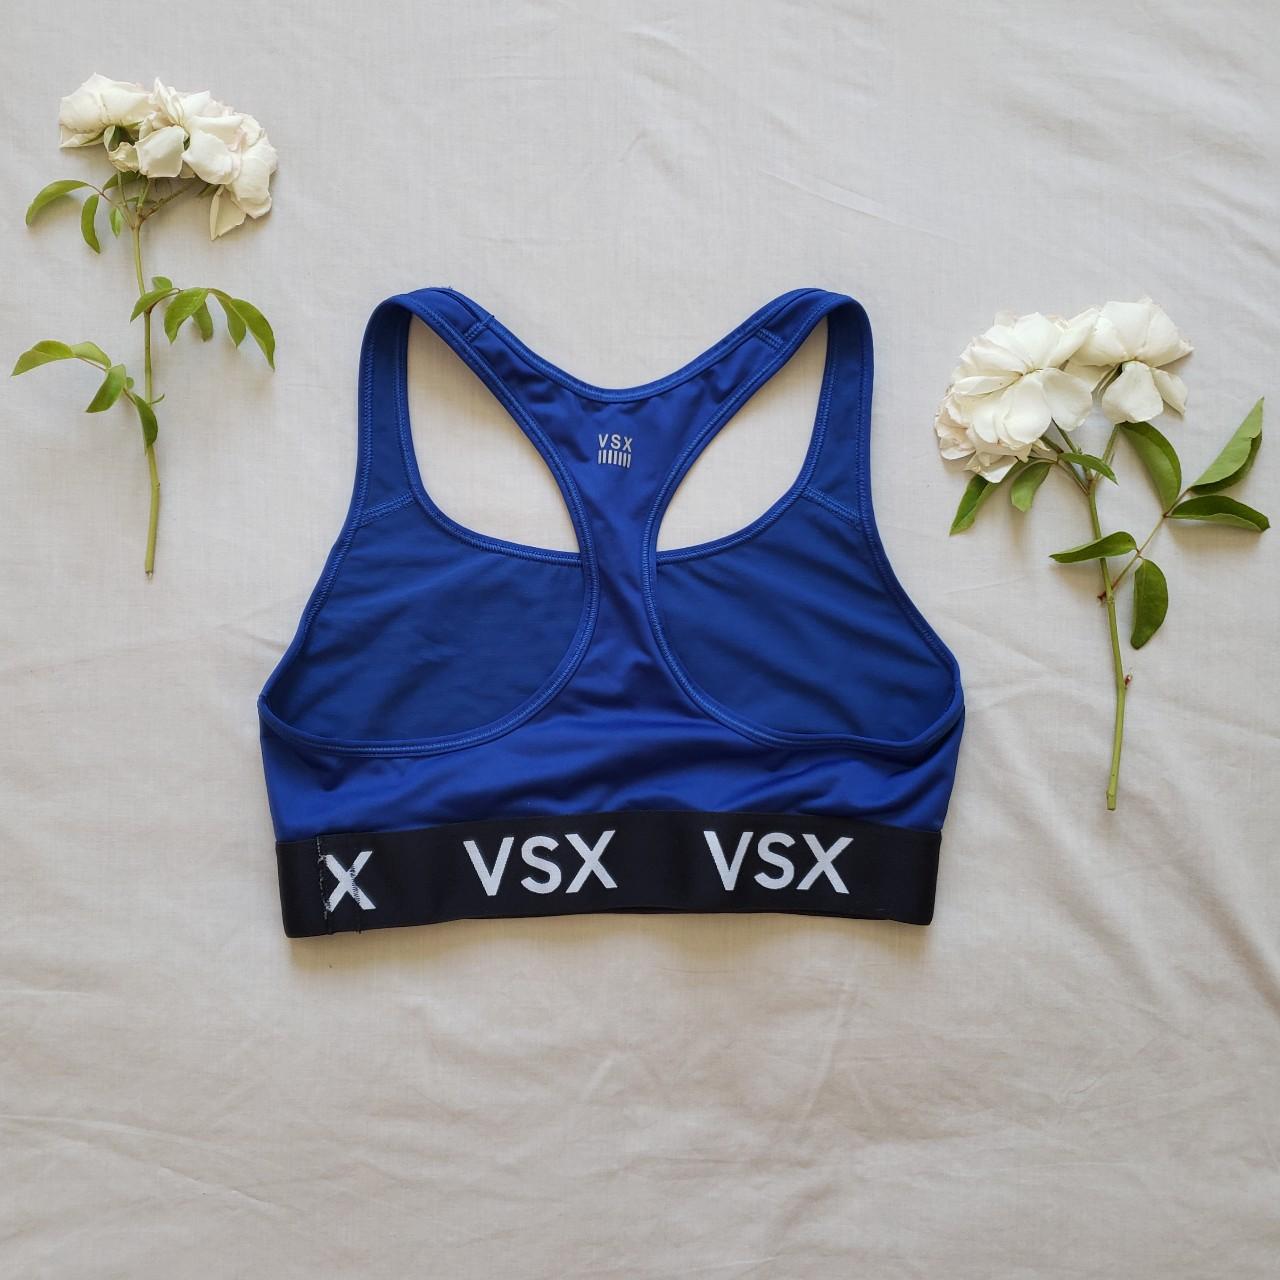 Victoria’s Secret (VSX) “The Player” Sport Bra